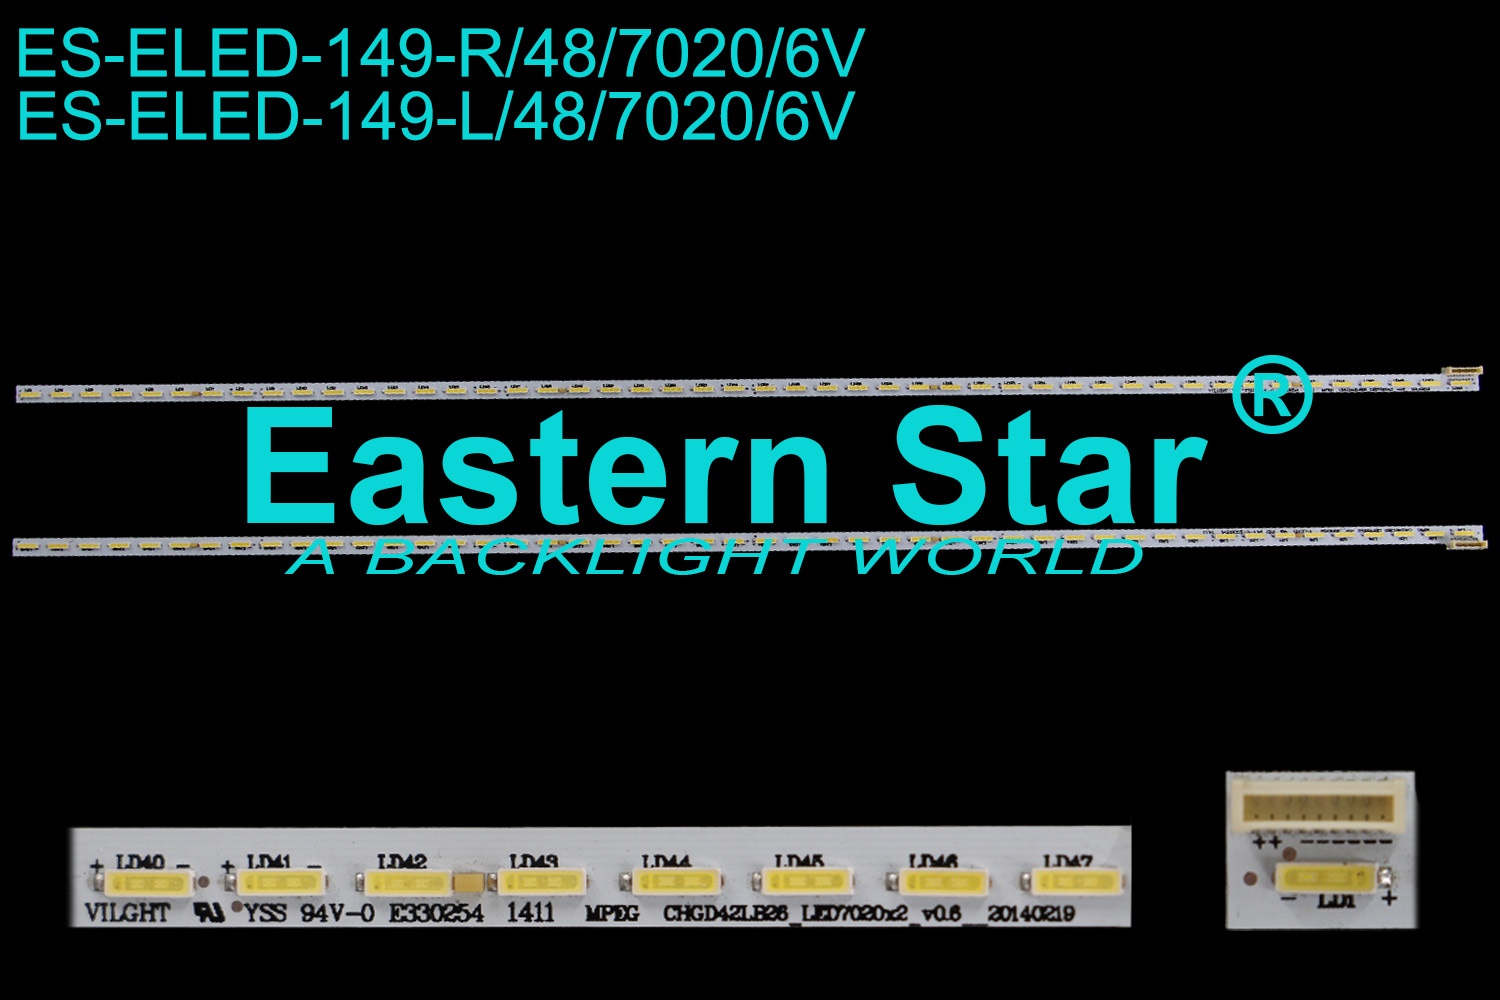 ES-ELED-149 ELED/EDGE TV backlight use for Changhong 42'' 48LEDs CHGD42LB25/6 LED7020X2_v0.6__20140219/94V-0 E330254 1410/1 led strips(2)